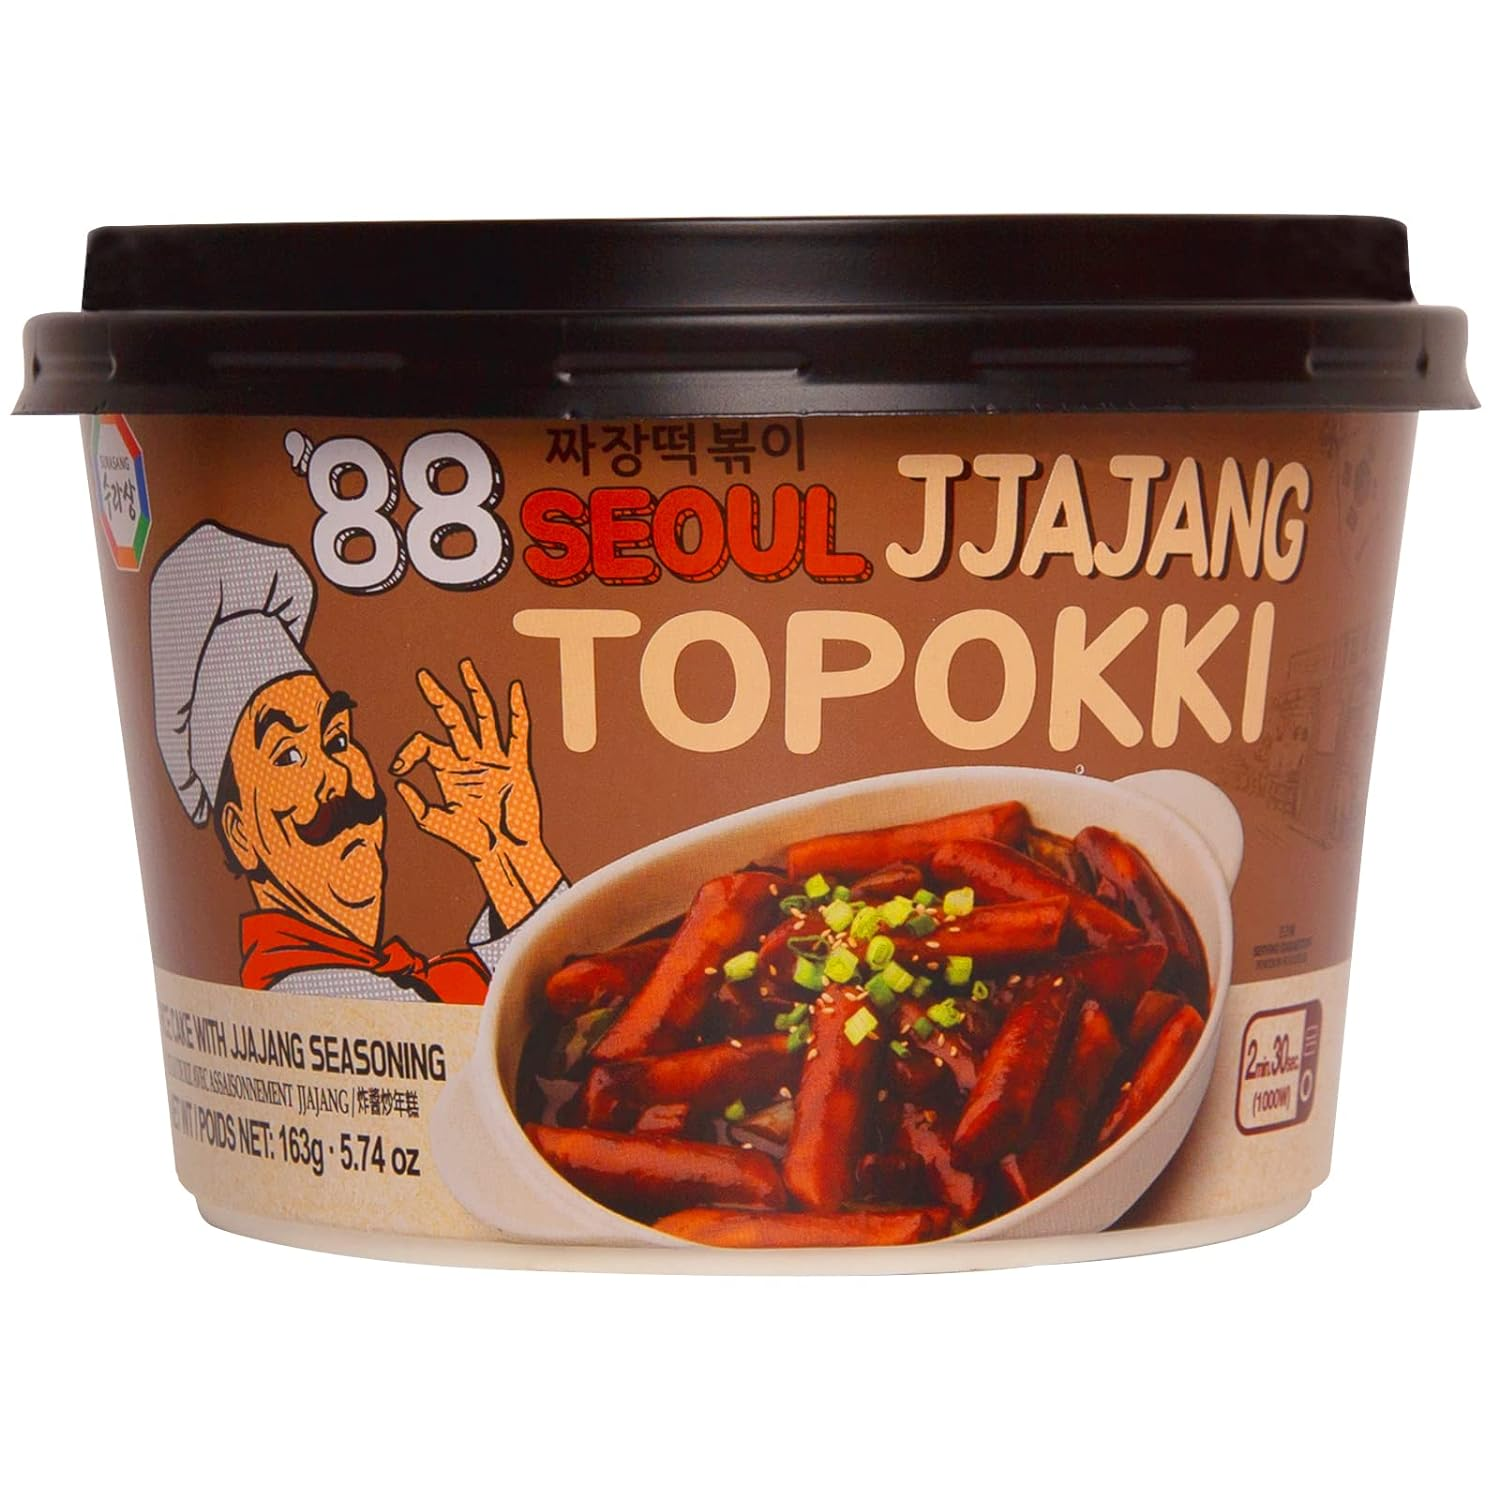 Surasang Jjajang Tteokbokki, Korean Rice Cakes with Sweet and Smoky Black Bean Sauce 163g